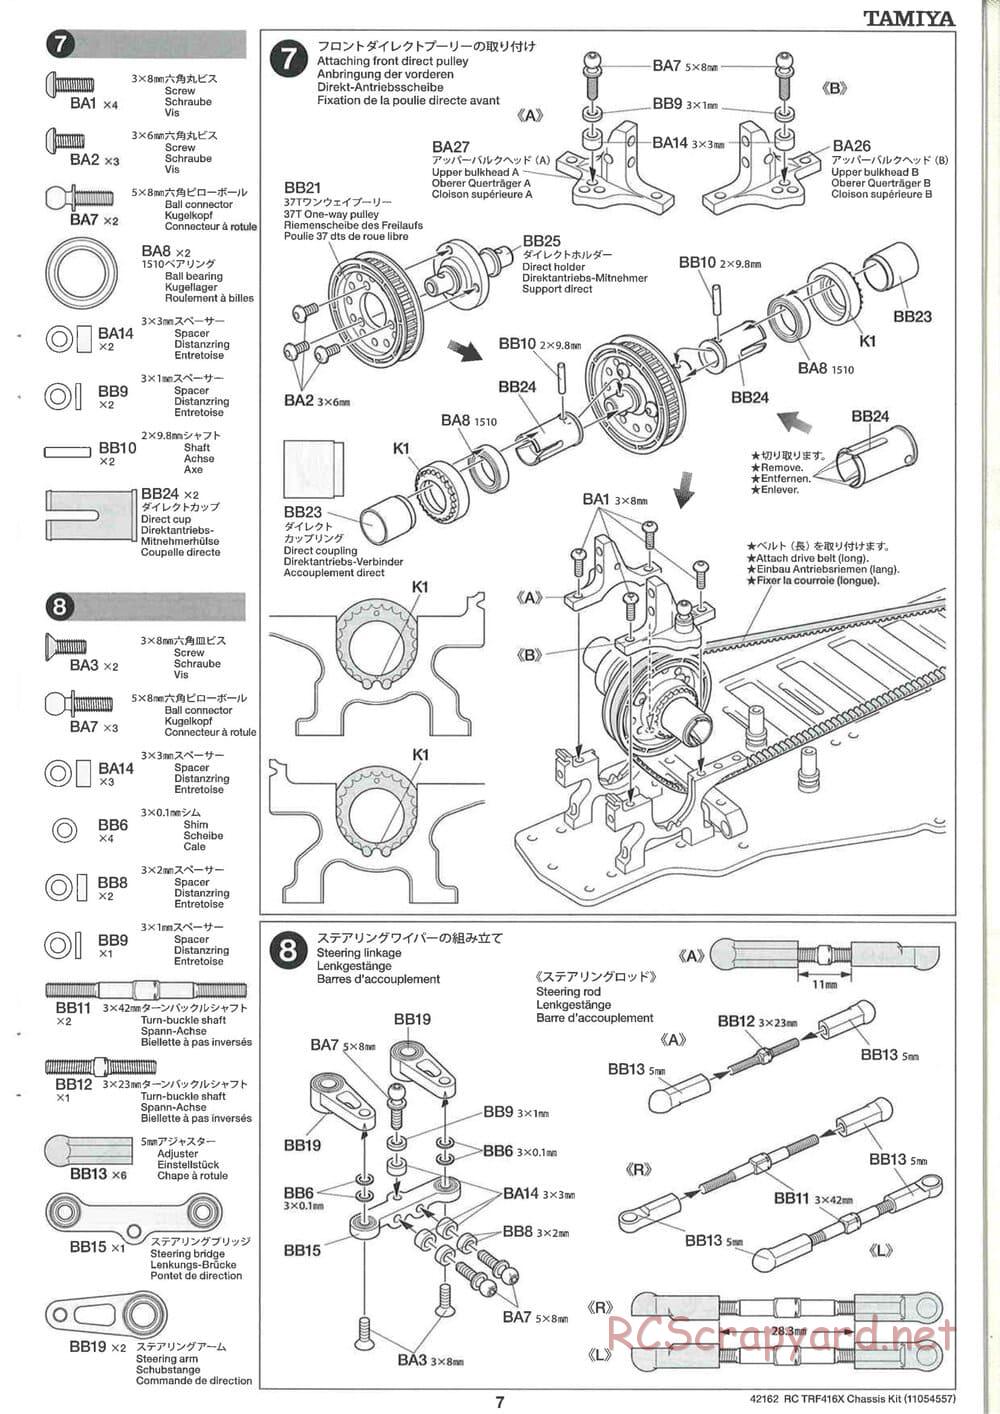 Tamiya - TRF416X Chassis - Manual - Page 7